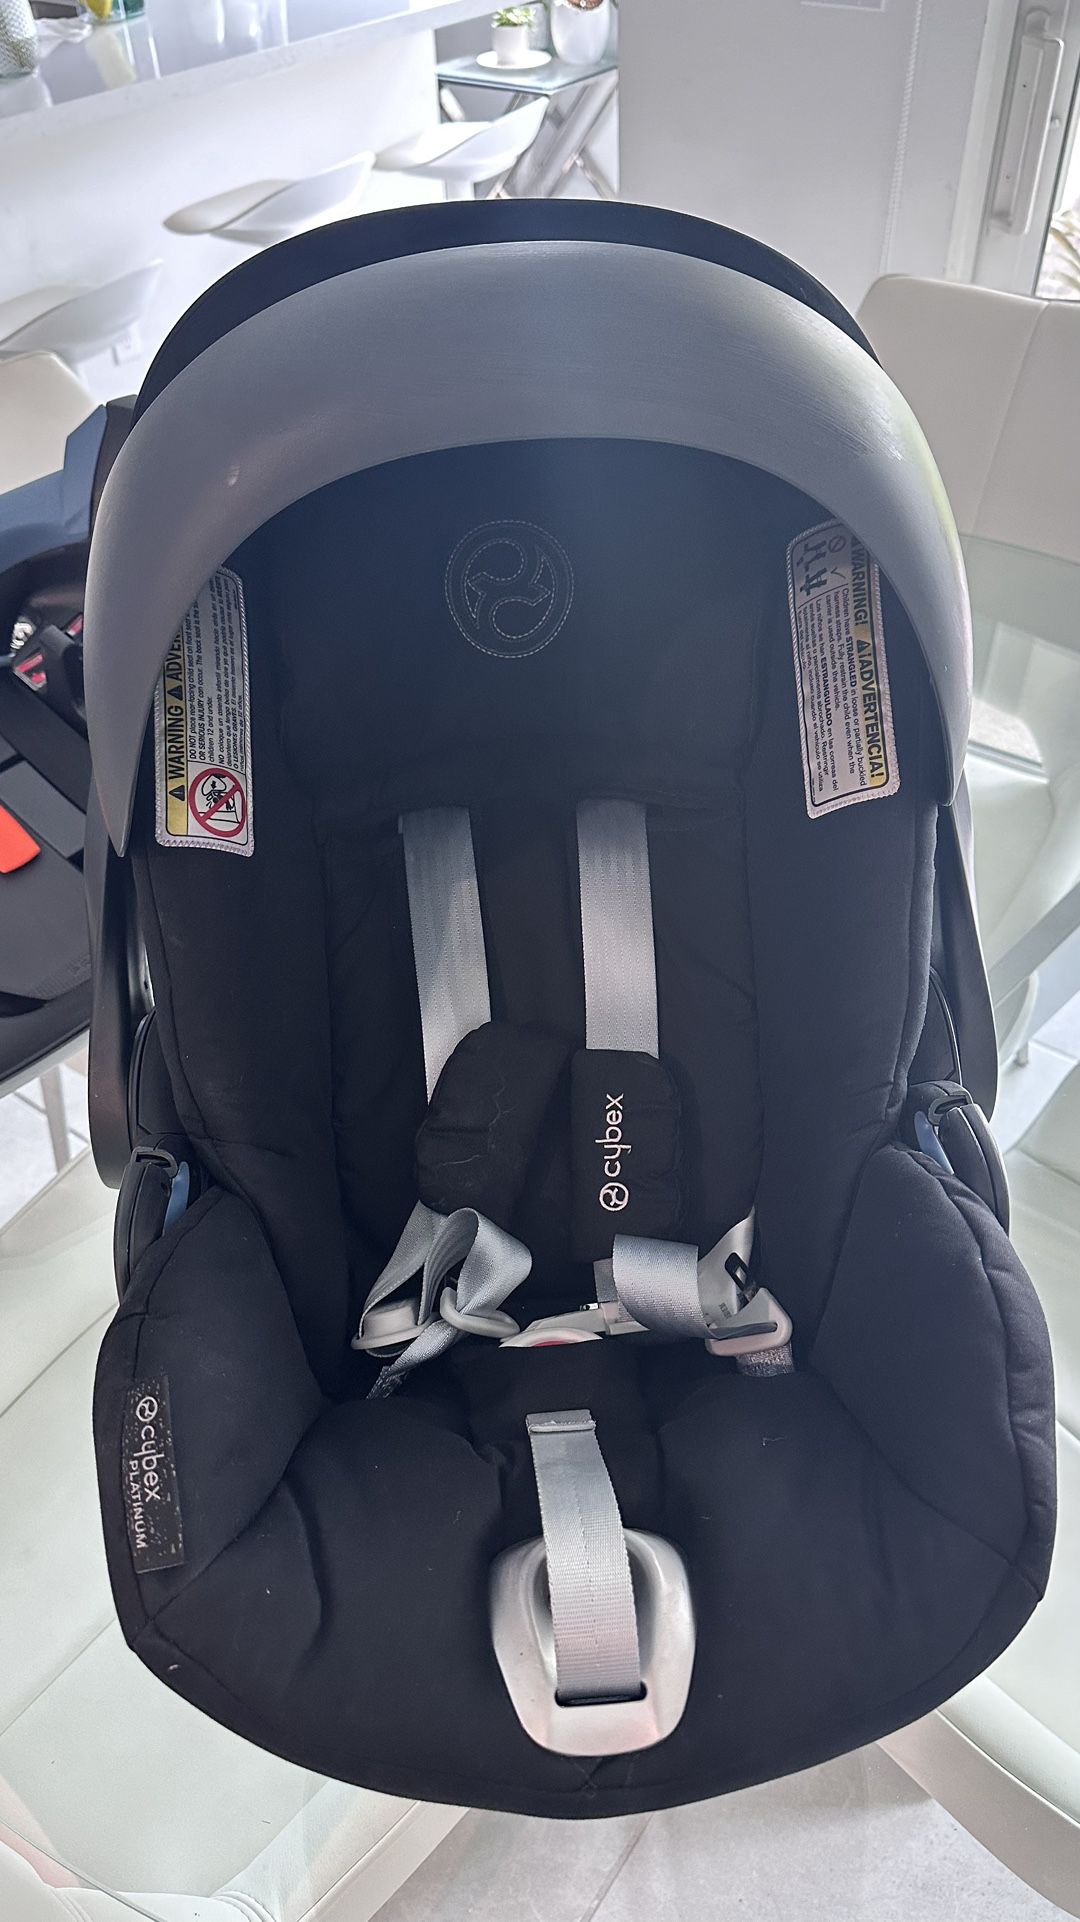 CYBEX Platinum Cloud Q Infant Car Seat in Black